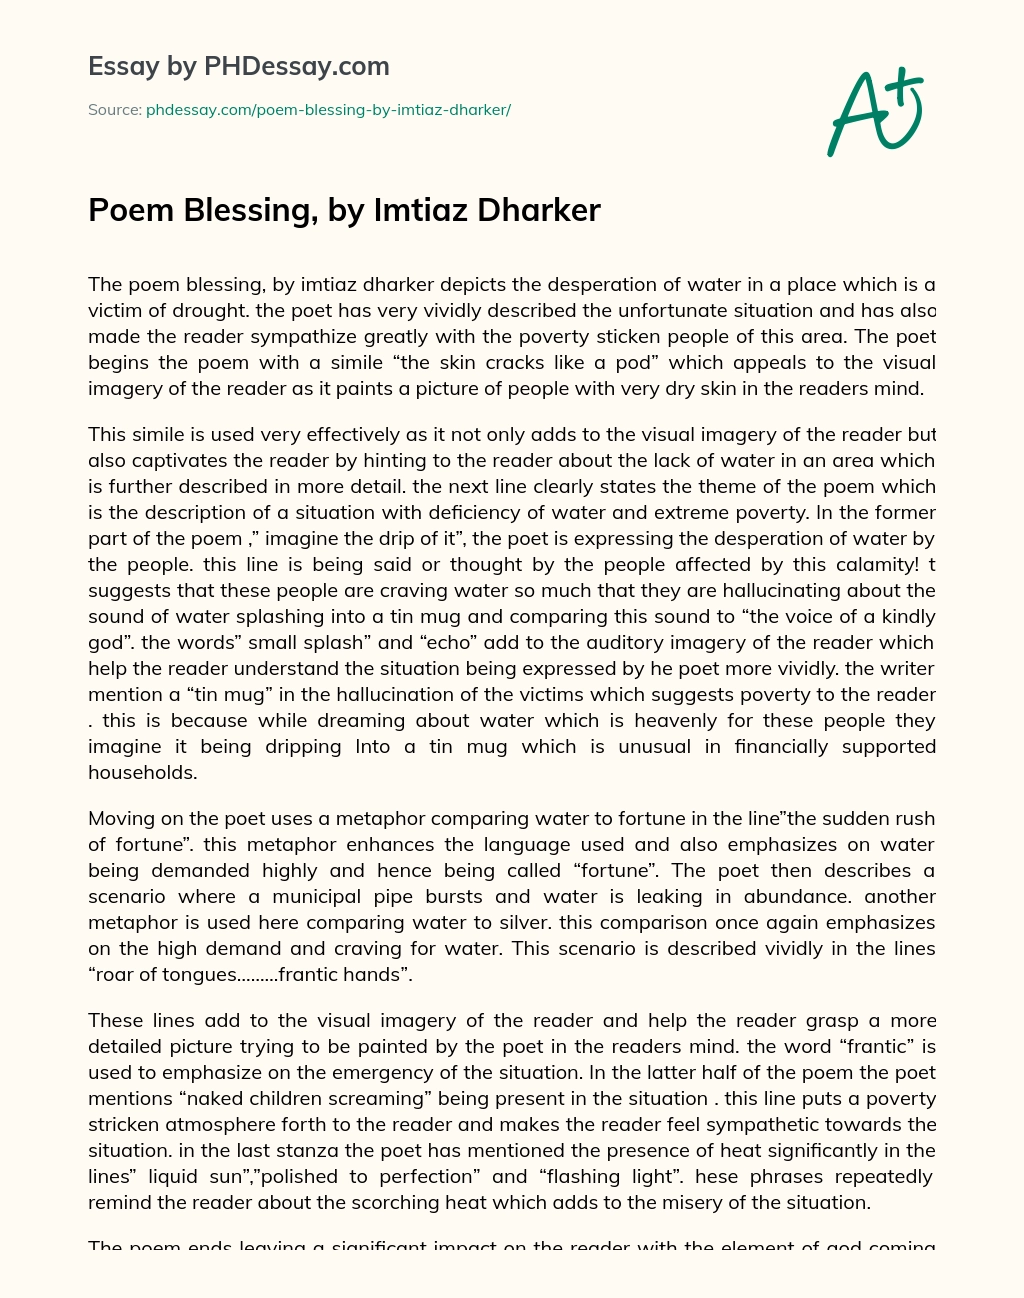 Poem Blessing, by Imtiaz Dharker essay